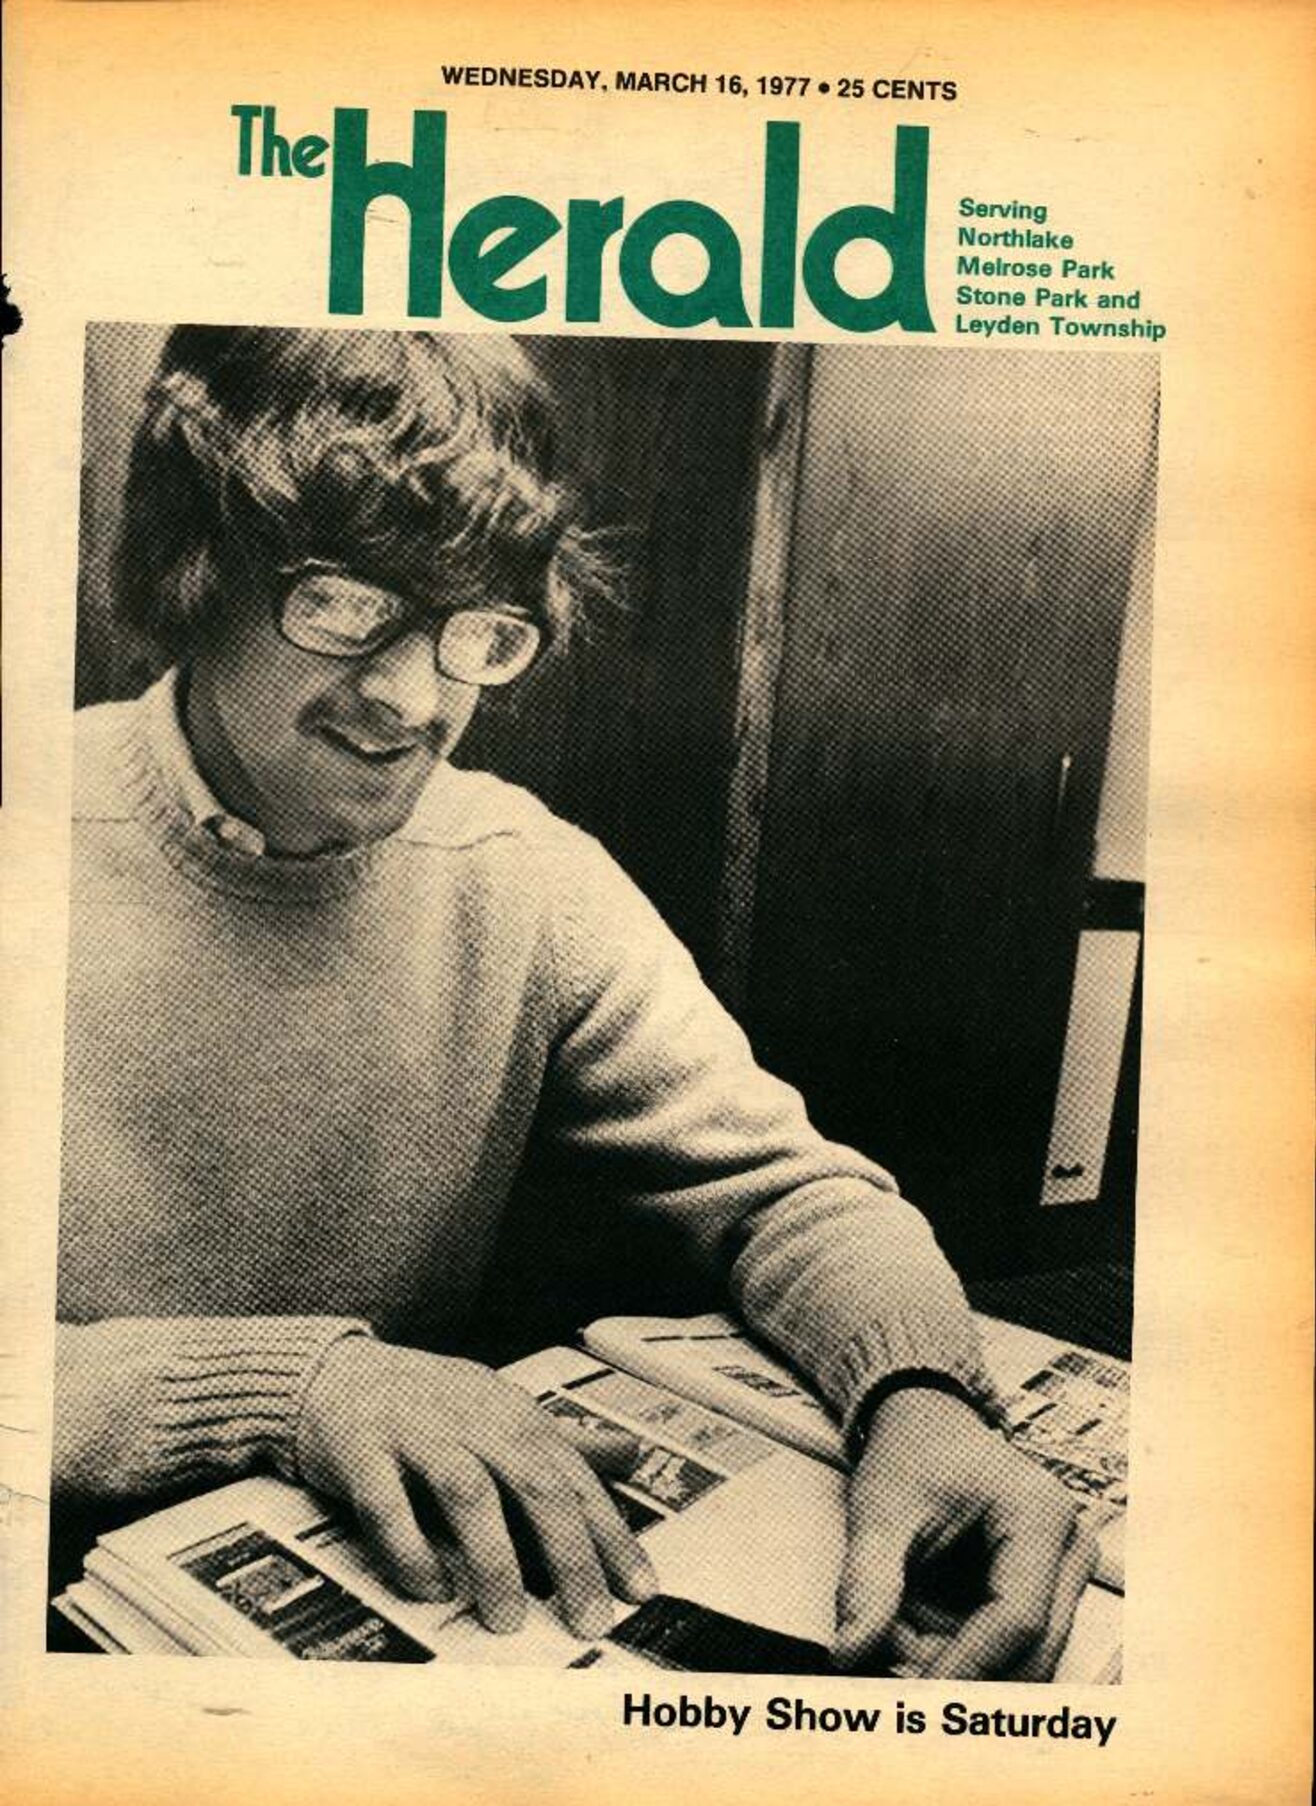 The Herald – 19770316